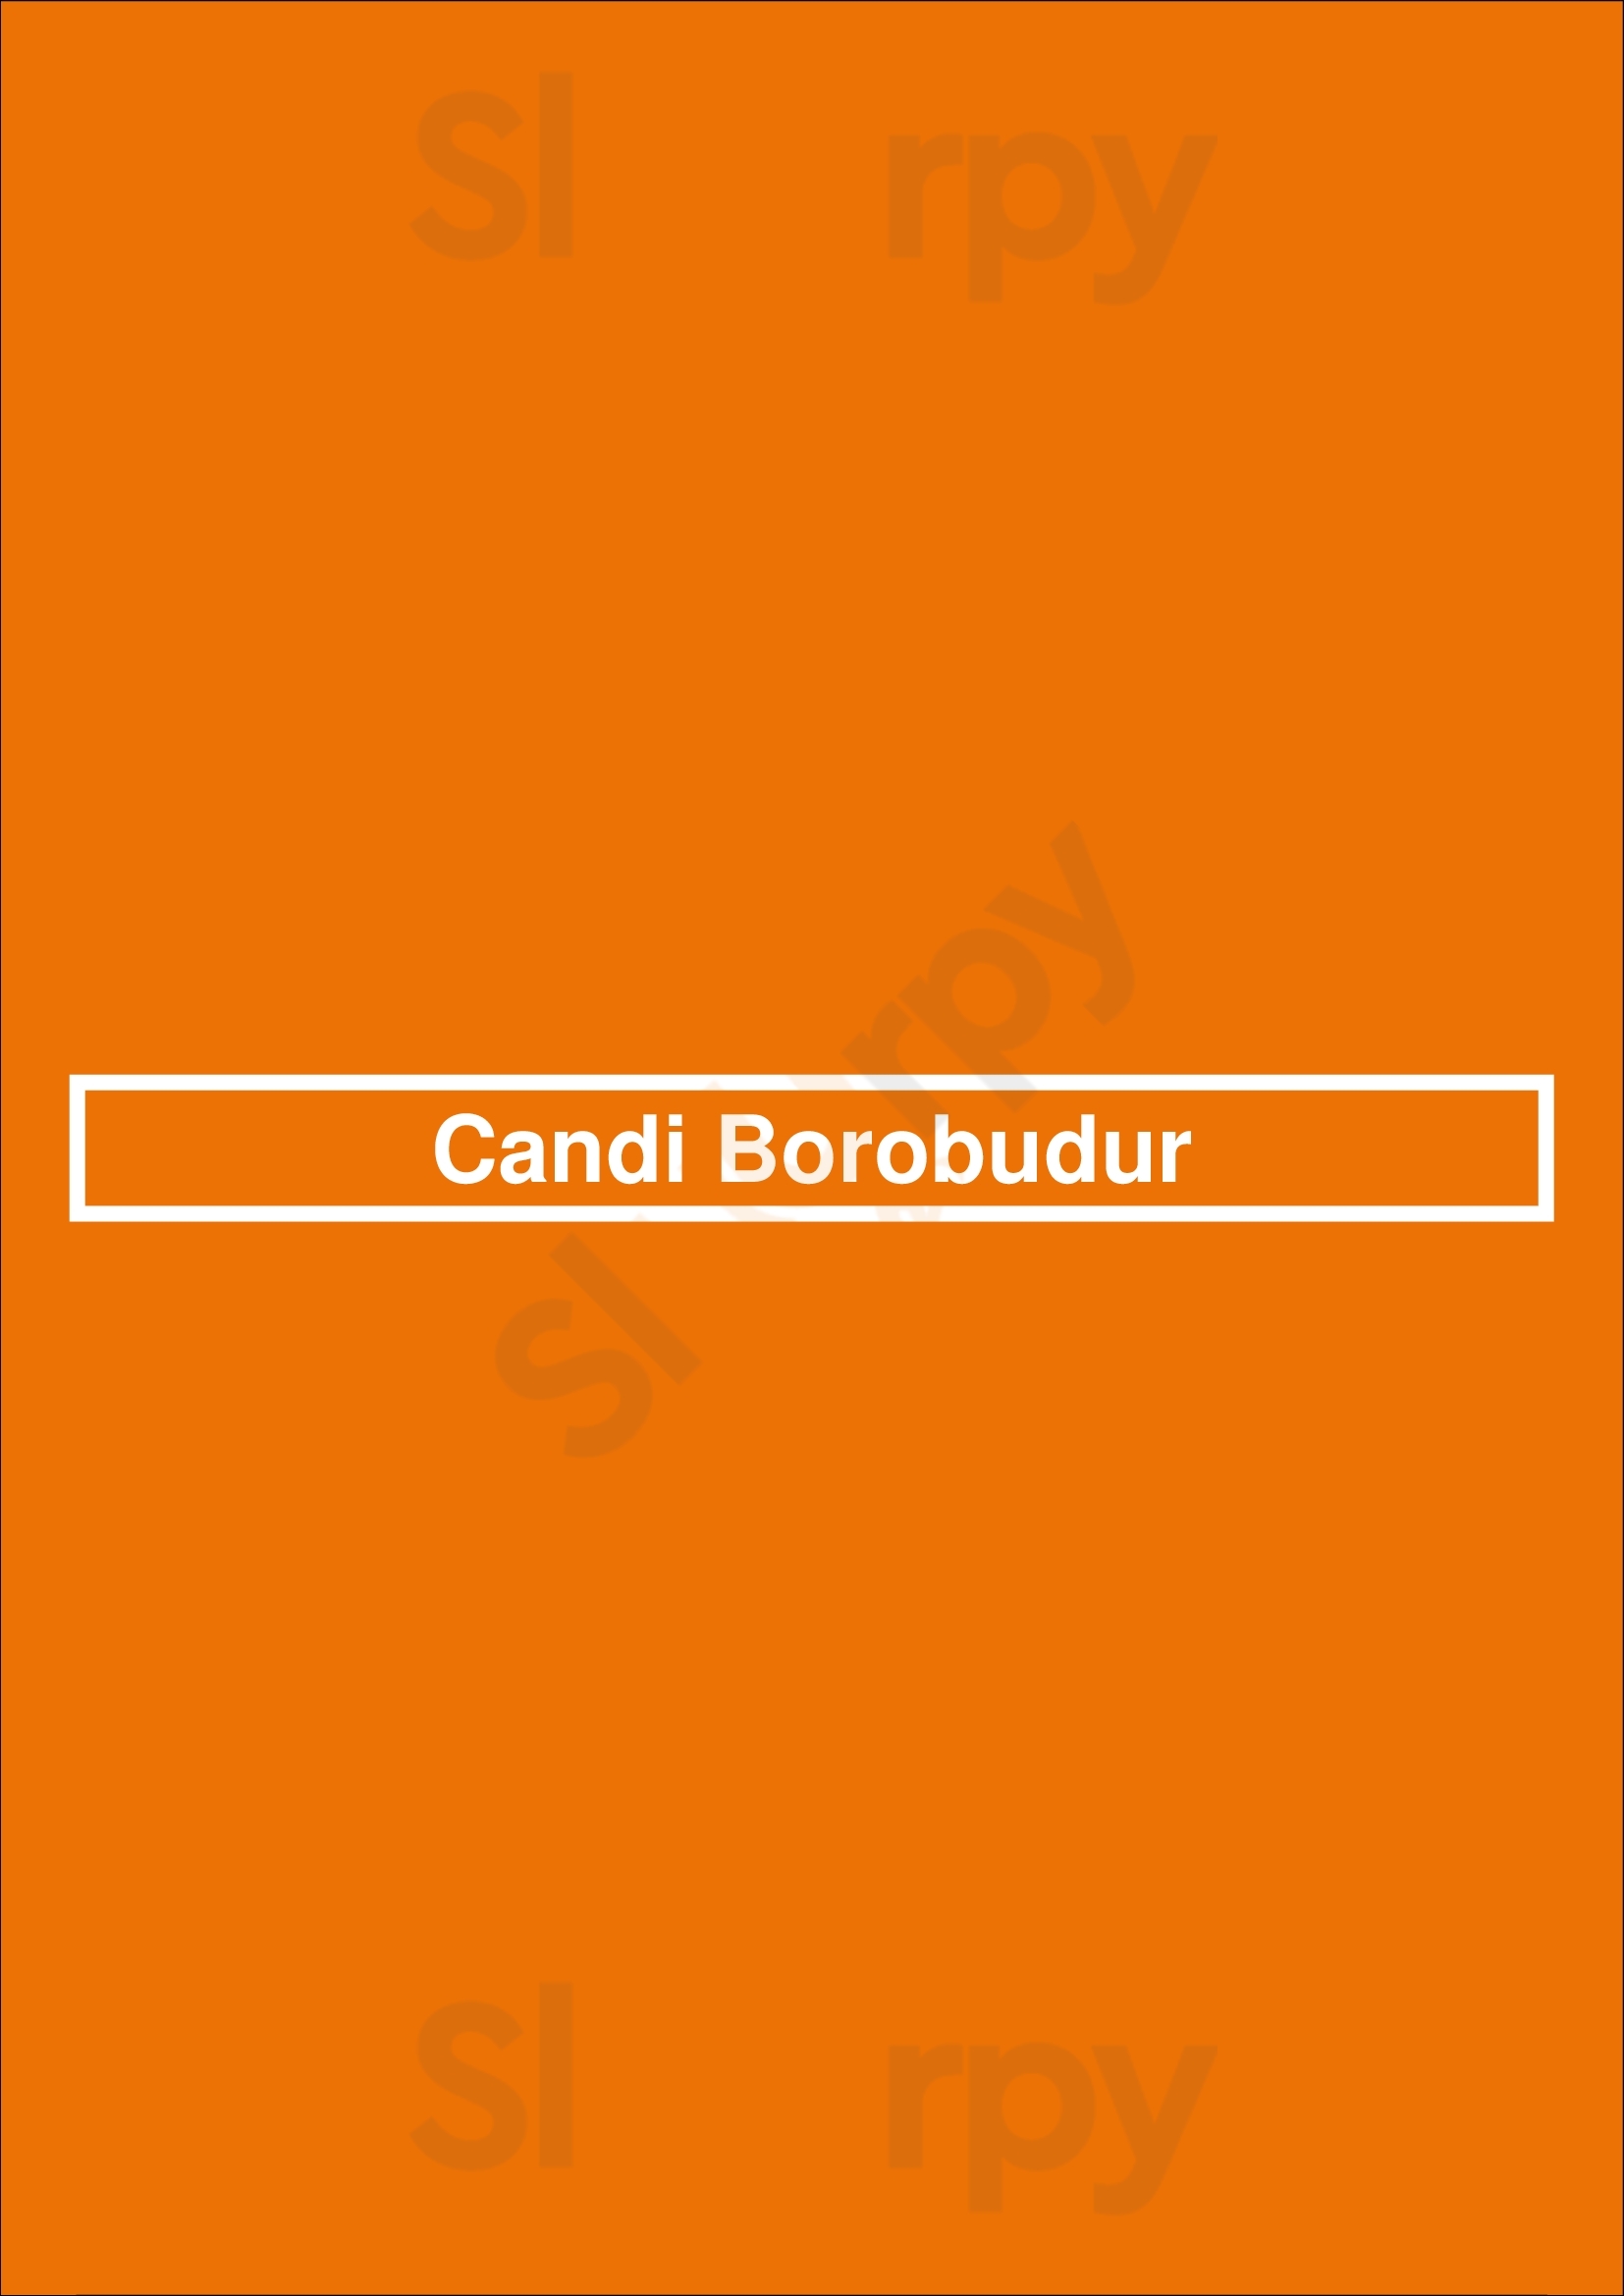 Candi Borobudur Bussum Menu - 1